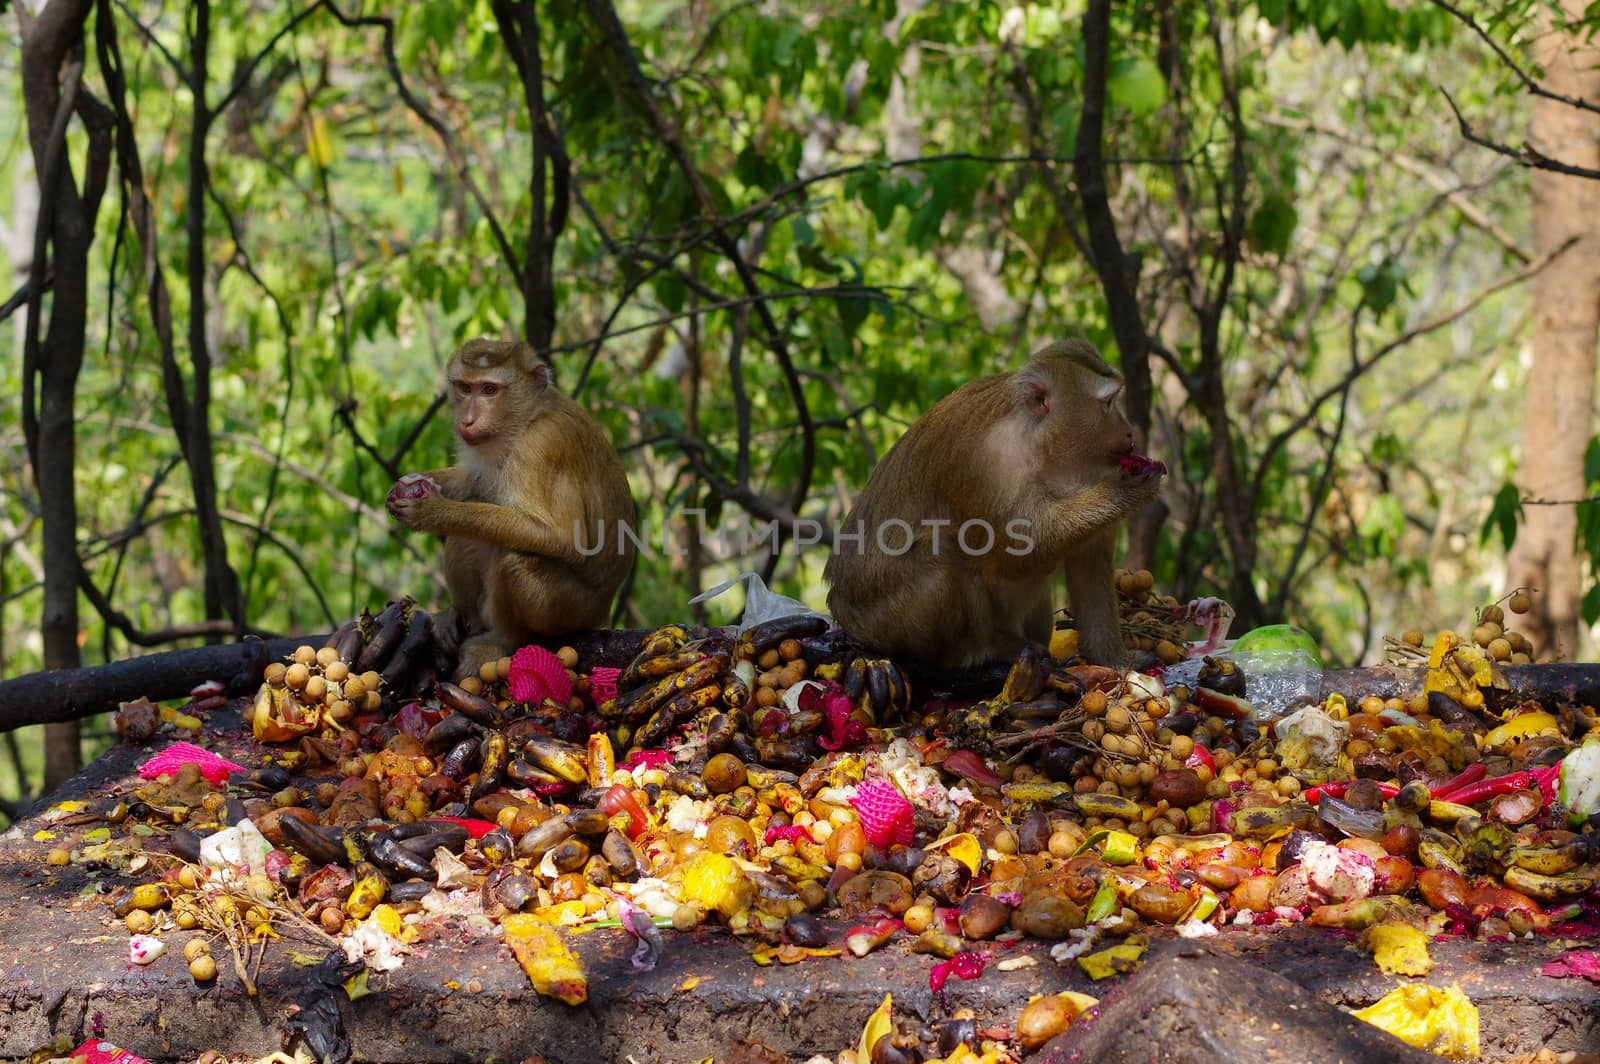 macaca monkey family eating lot of fruits, Phuket Thailand. by evolutionnow